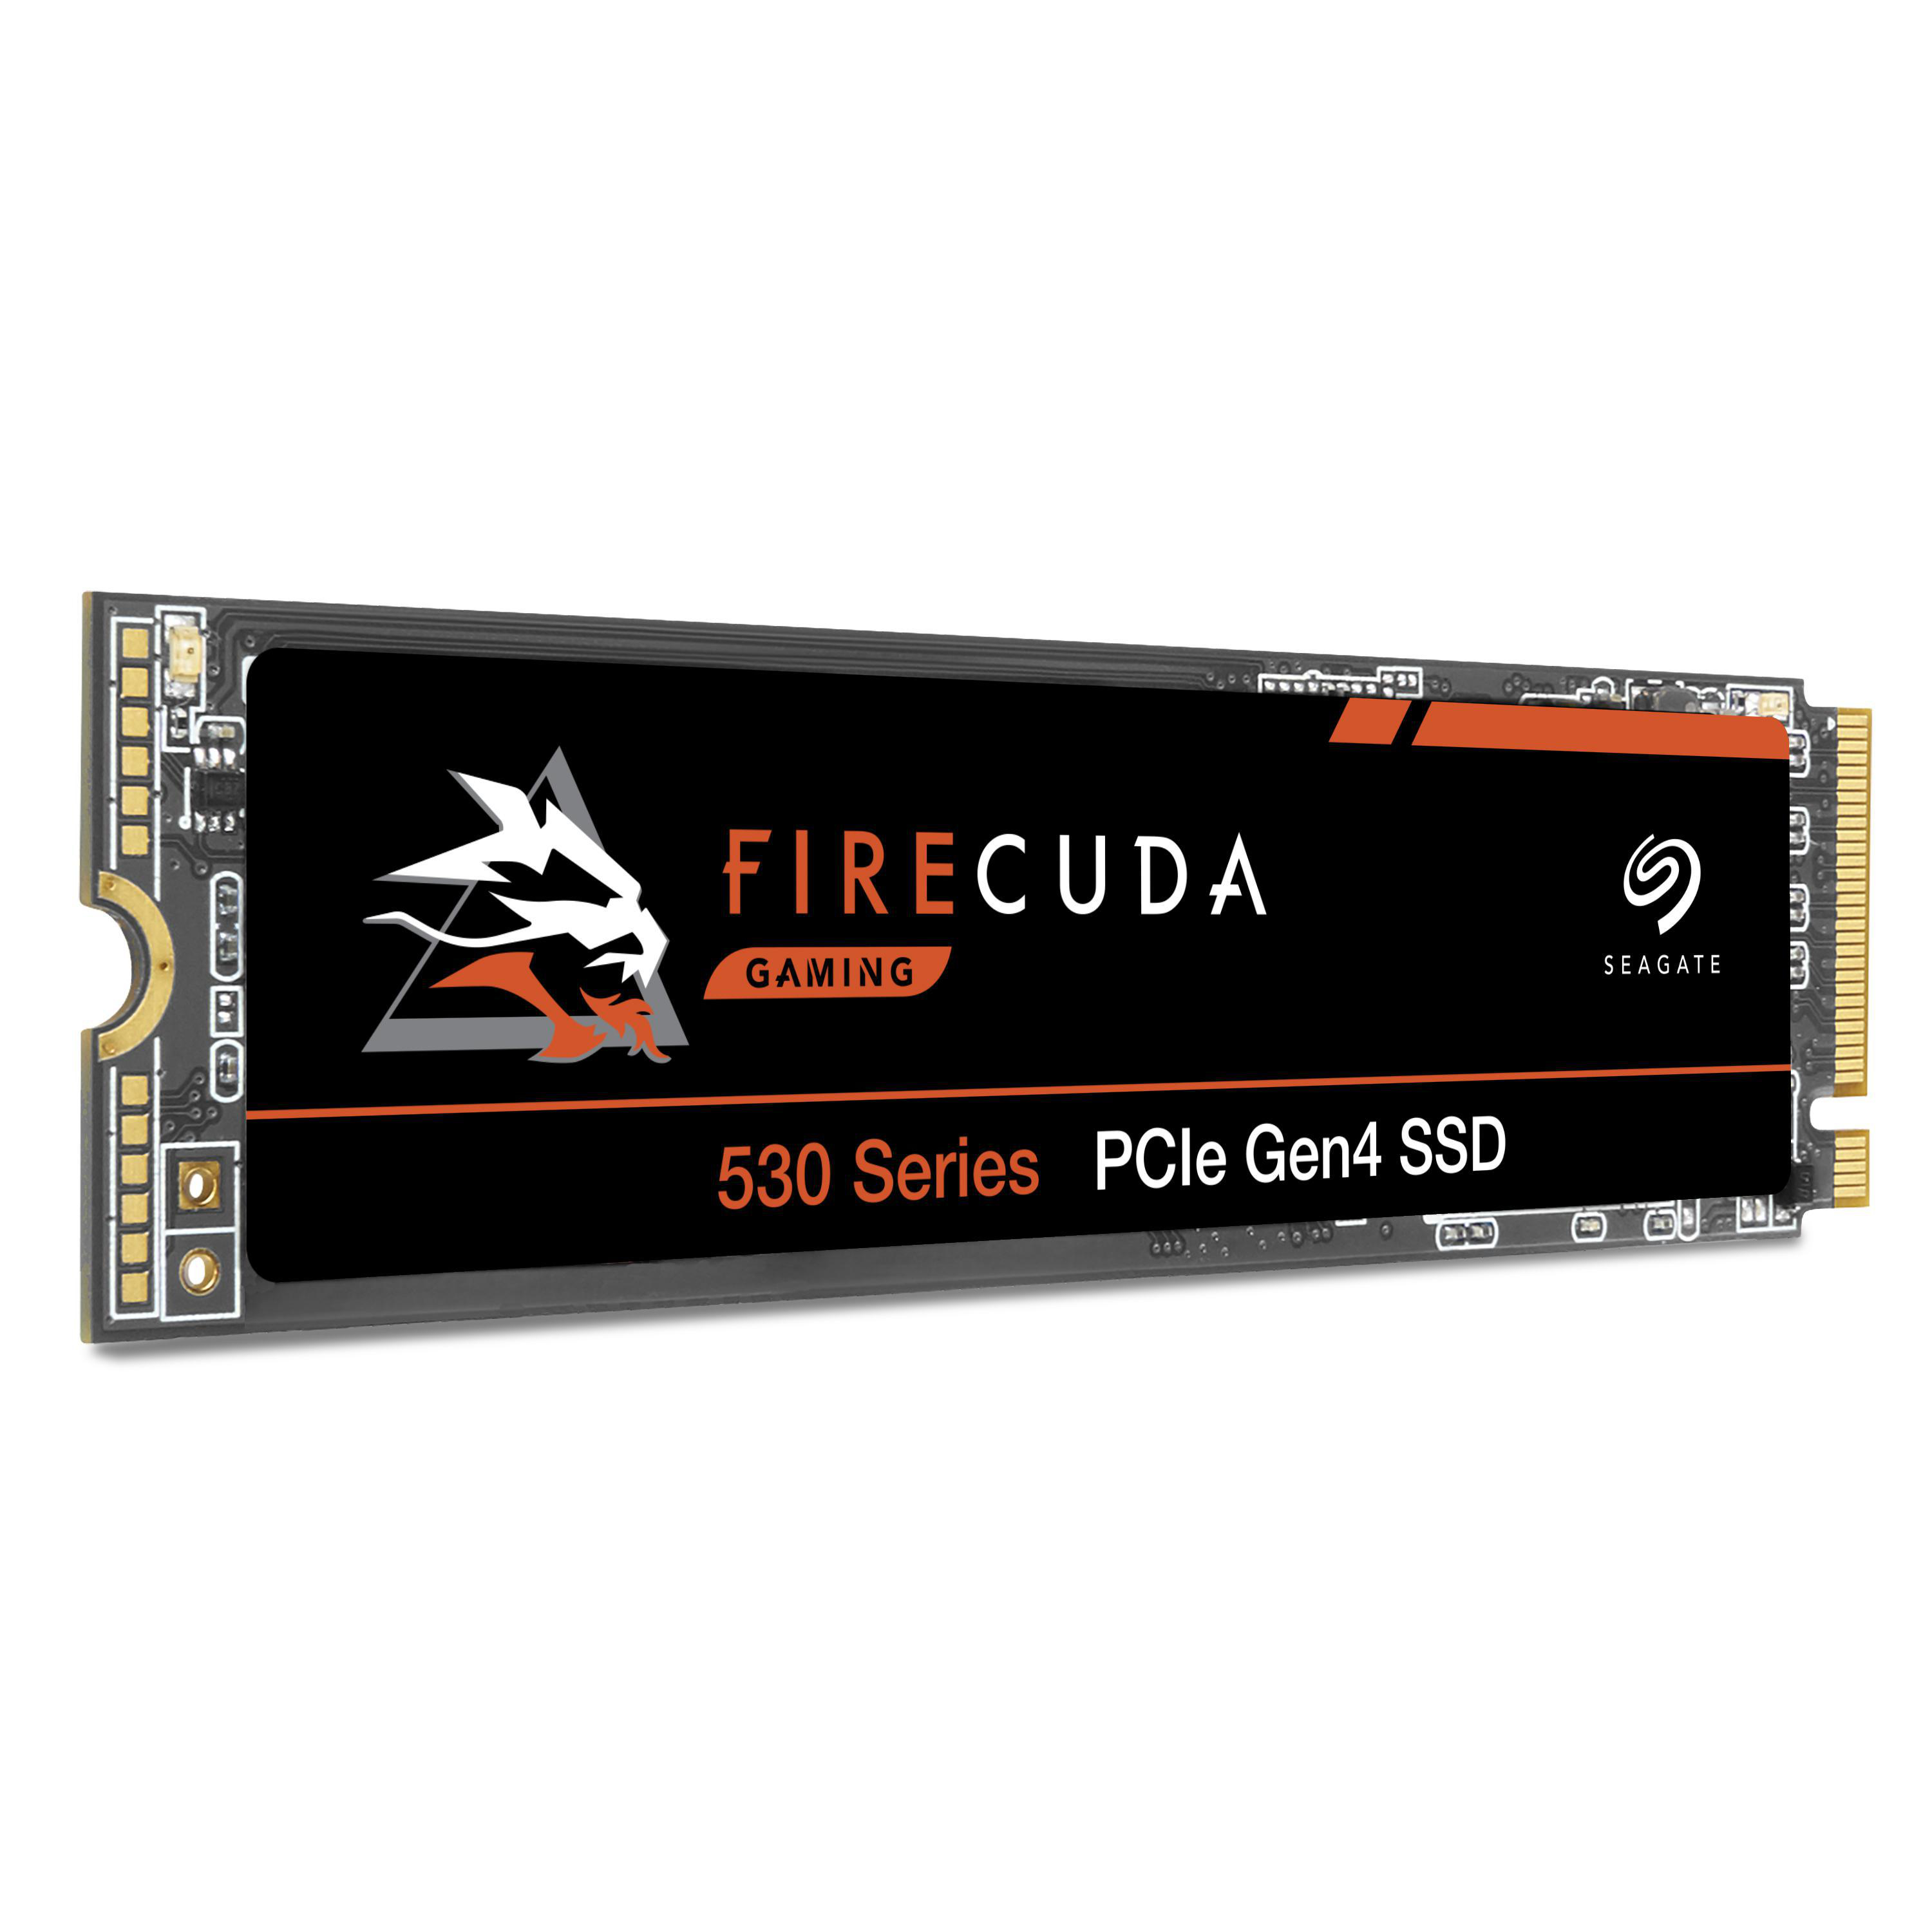 Festplatte NVMe 2 PCI Flash, 530 SSD Firecuda intern Express, NAND Retail, TB SEAGATE